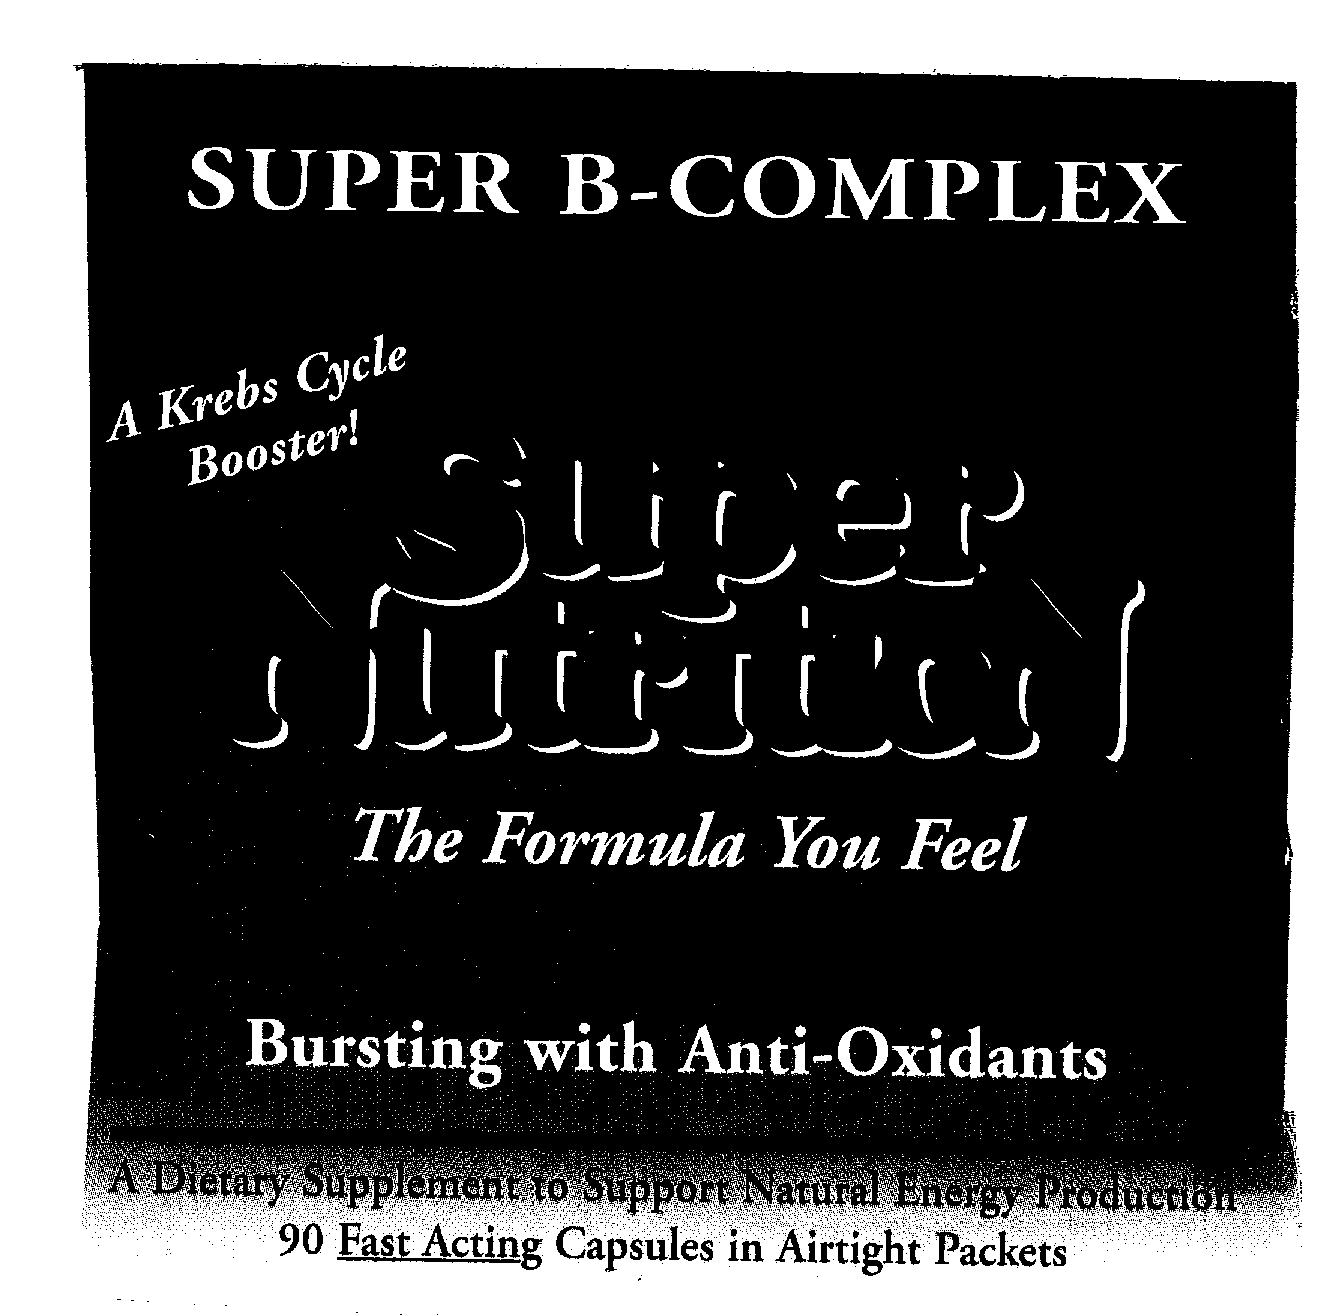  ENERGY CAPS SUPER B-COMPLEX SUPER NUTRITION THE FORMULA YOU FEEL BURSTING WITH ANTI-OXIDANTS